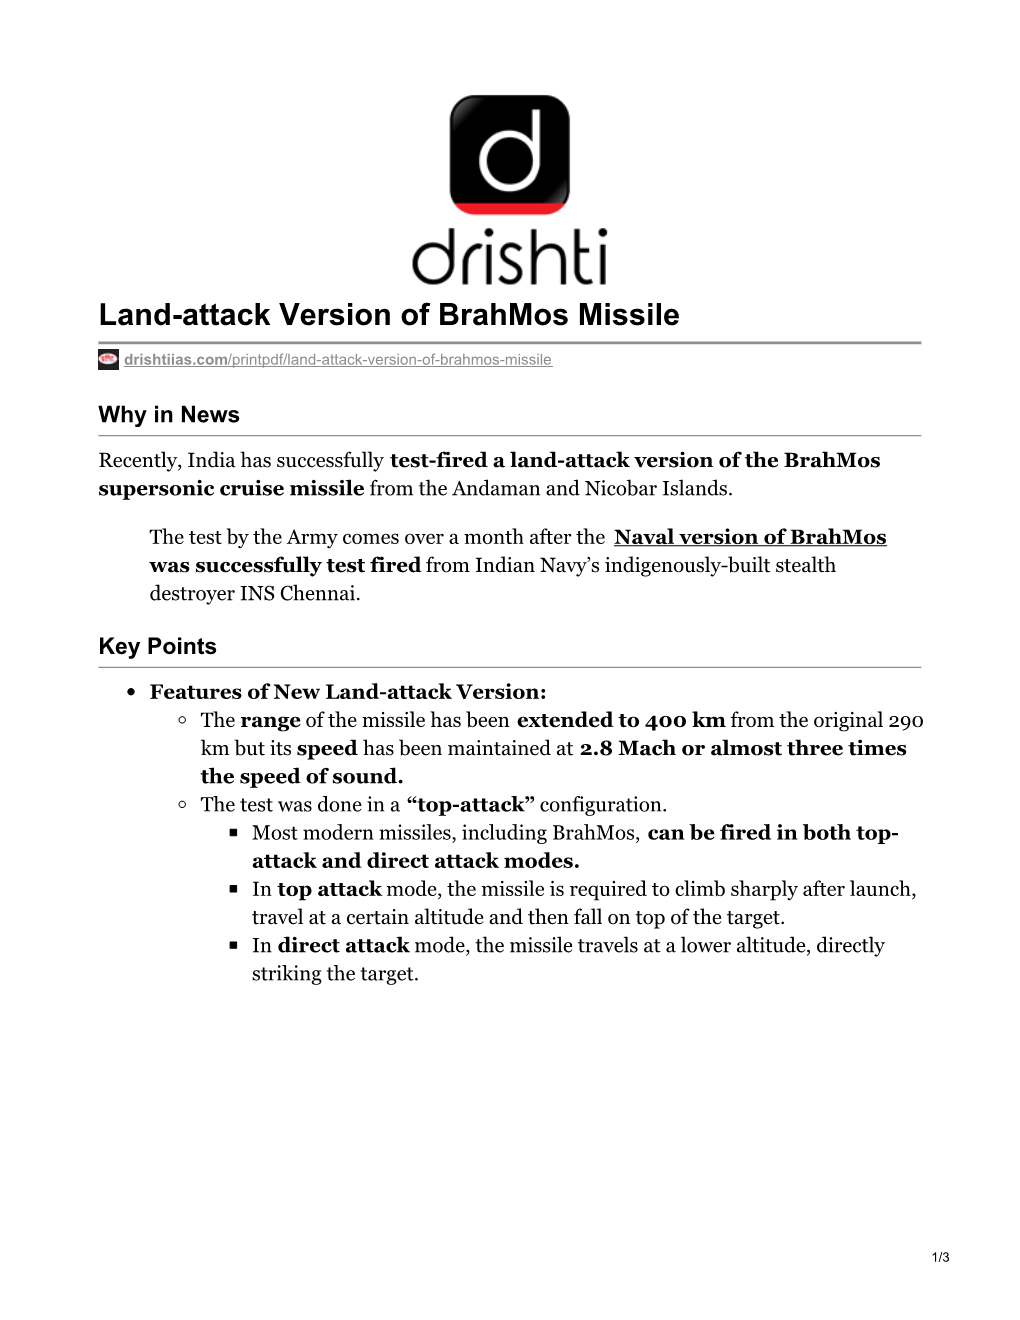 Land-Attack Version of Brahmos Missile